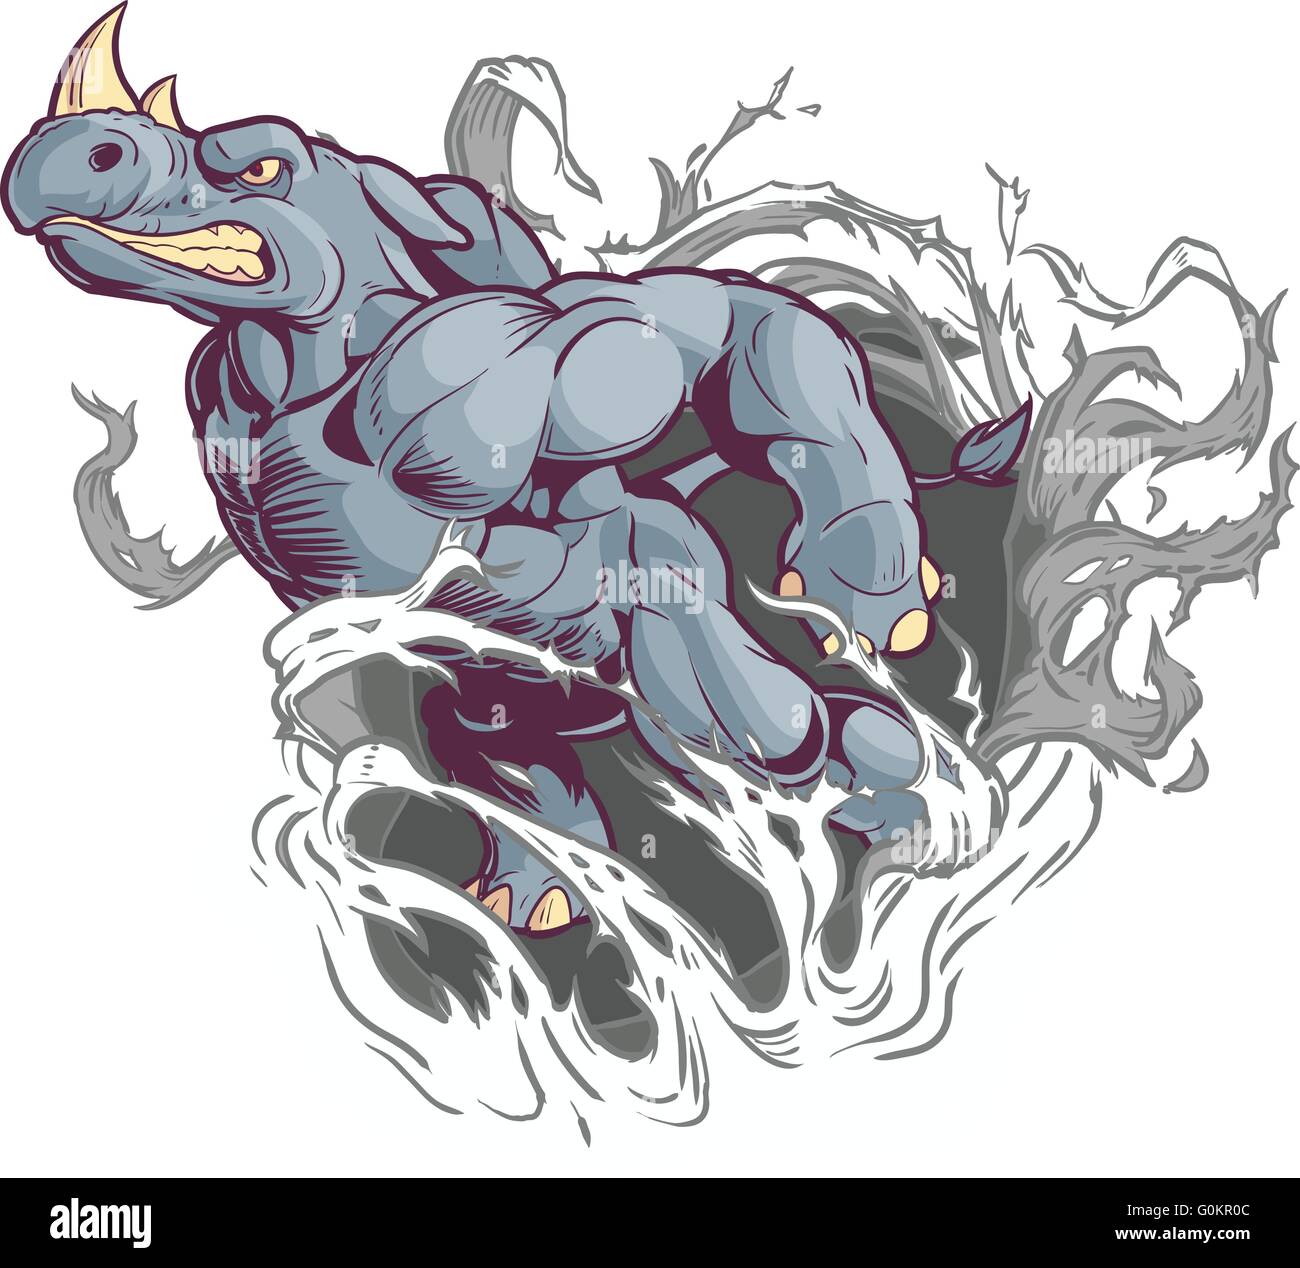 Vector Cartoon Clip Art Illustration of an Anthropomorphic Cartoon Mascot Rhino Ripping Through the Background. Stock Vector